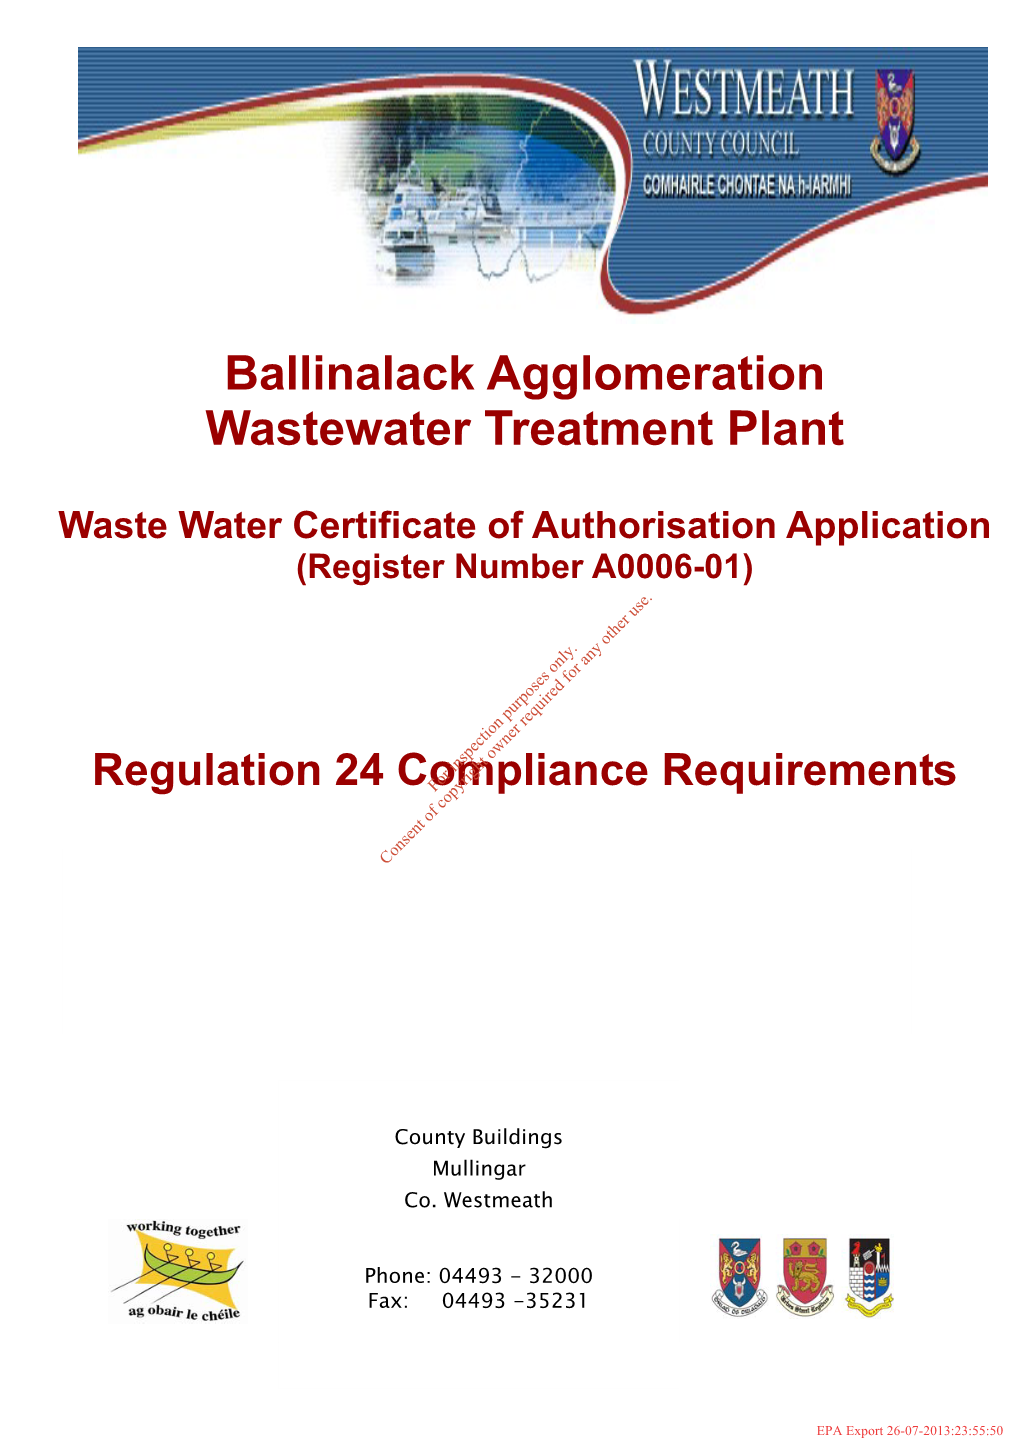 Ballinalack Agglomeration Wastewater Treatment Plant